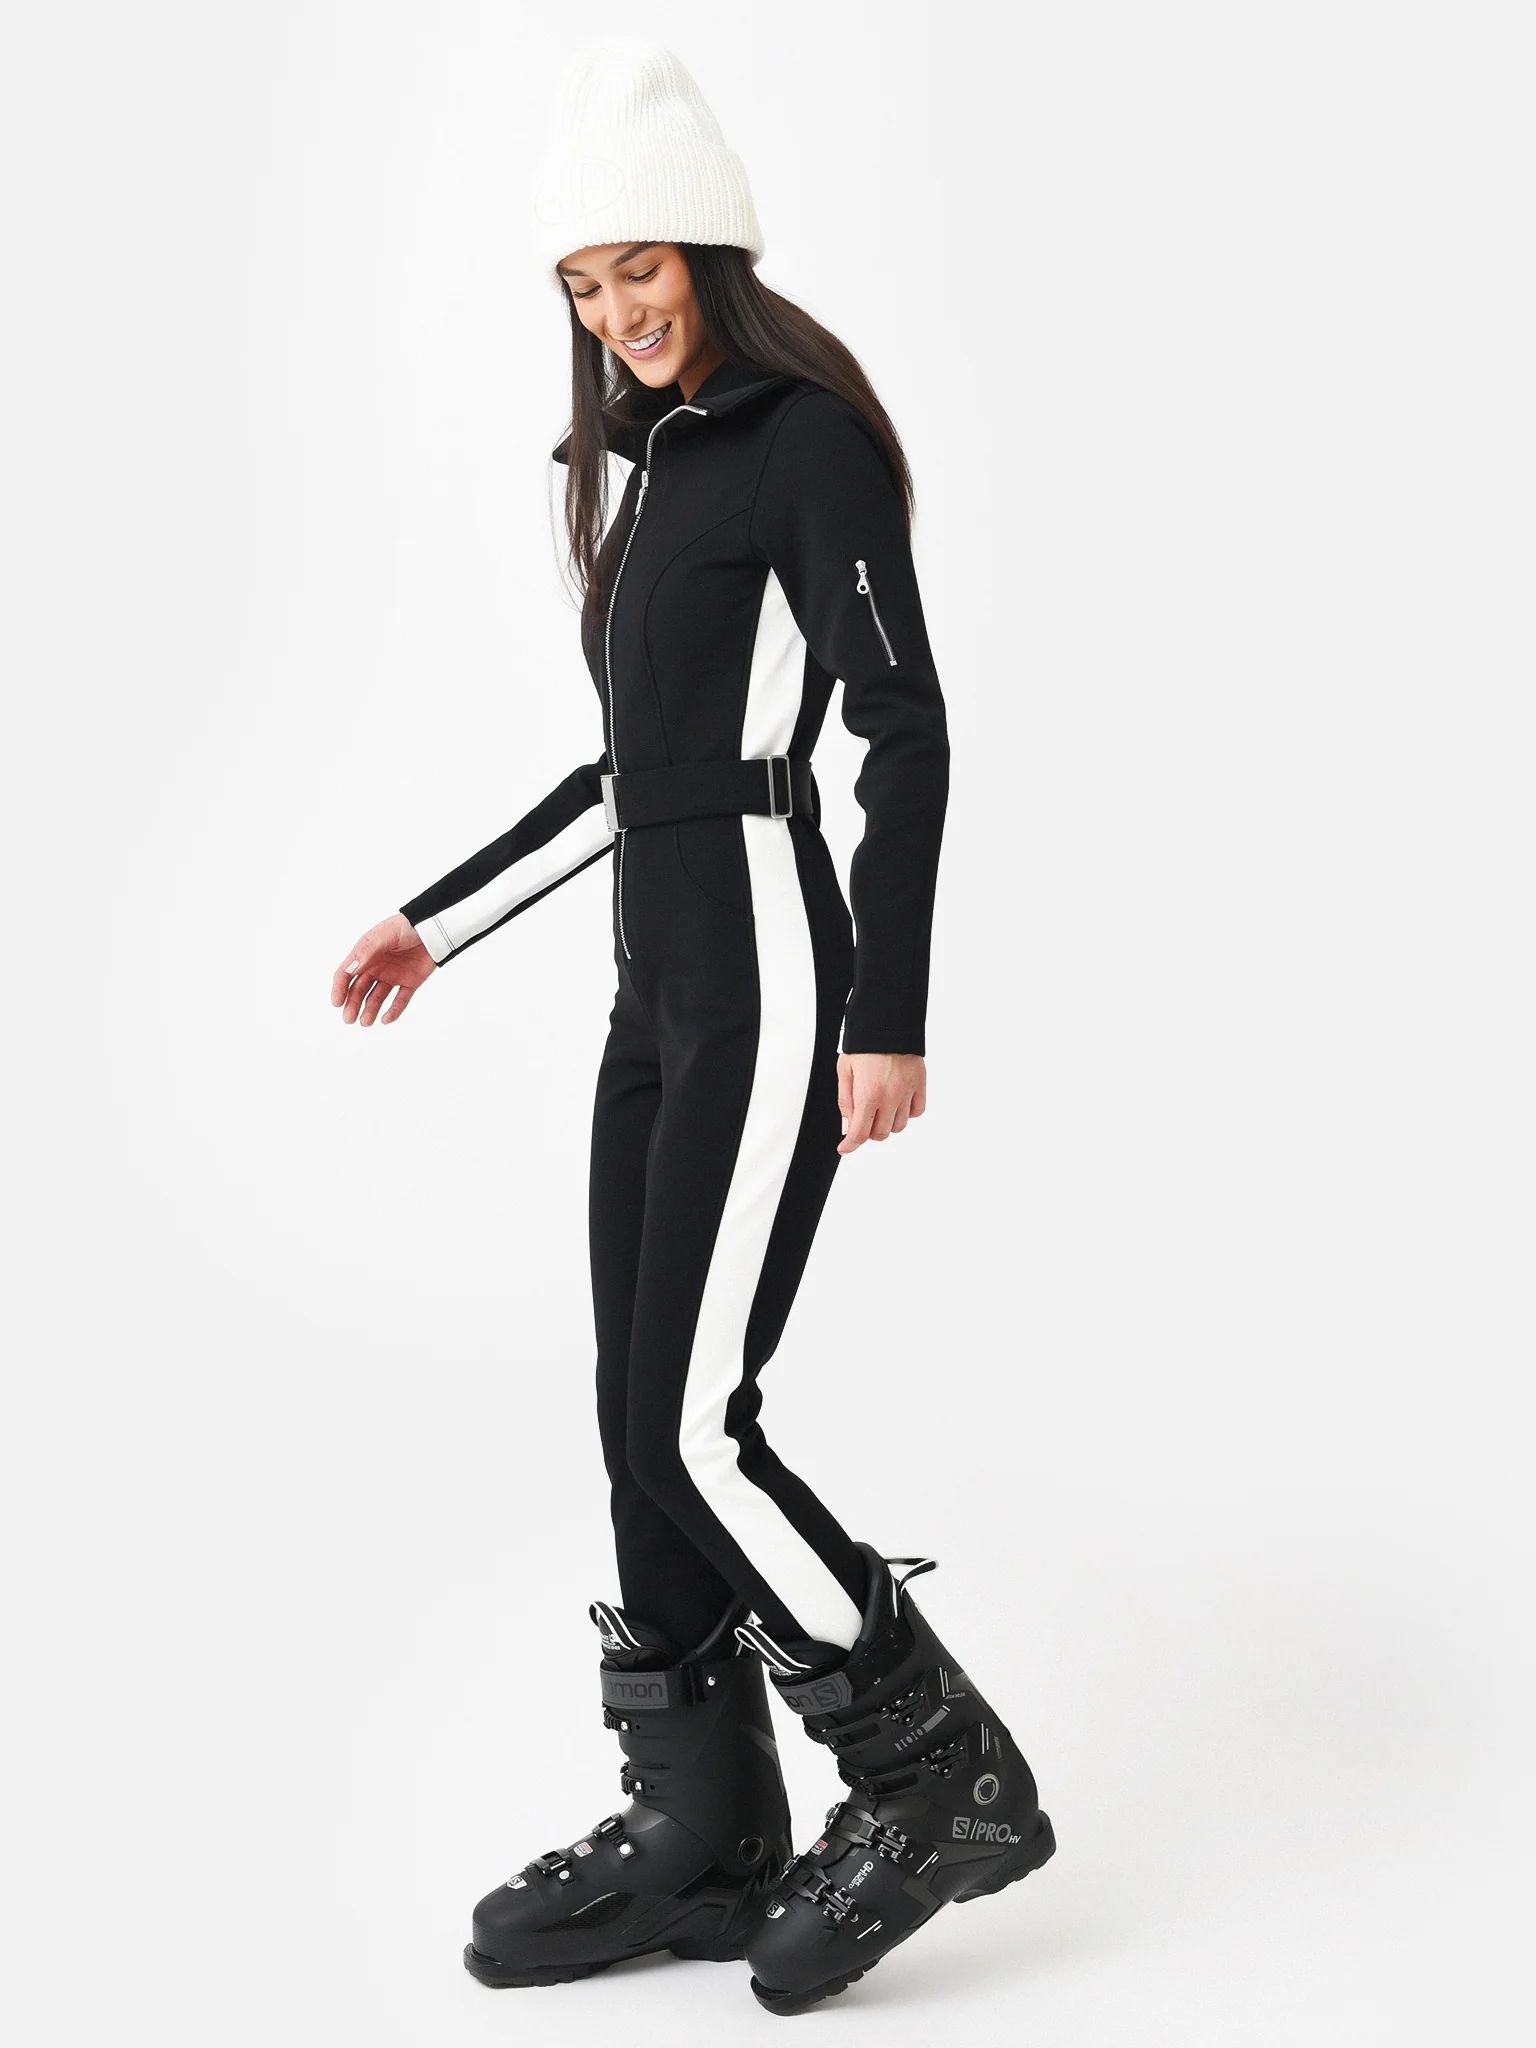 Cordova Women's Stretch Ski Suit | Saint Bernard